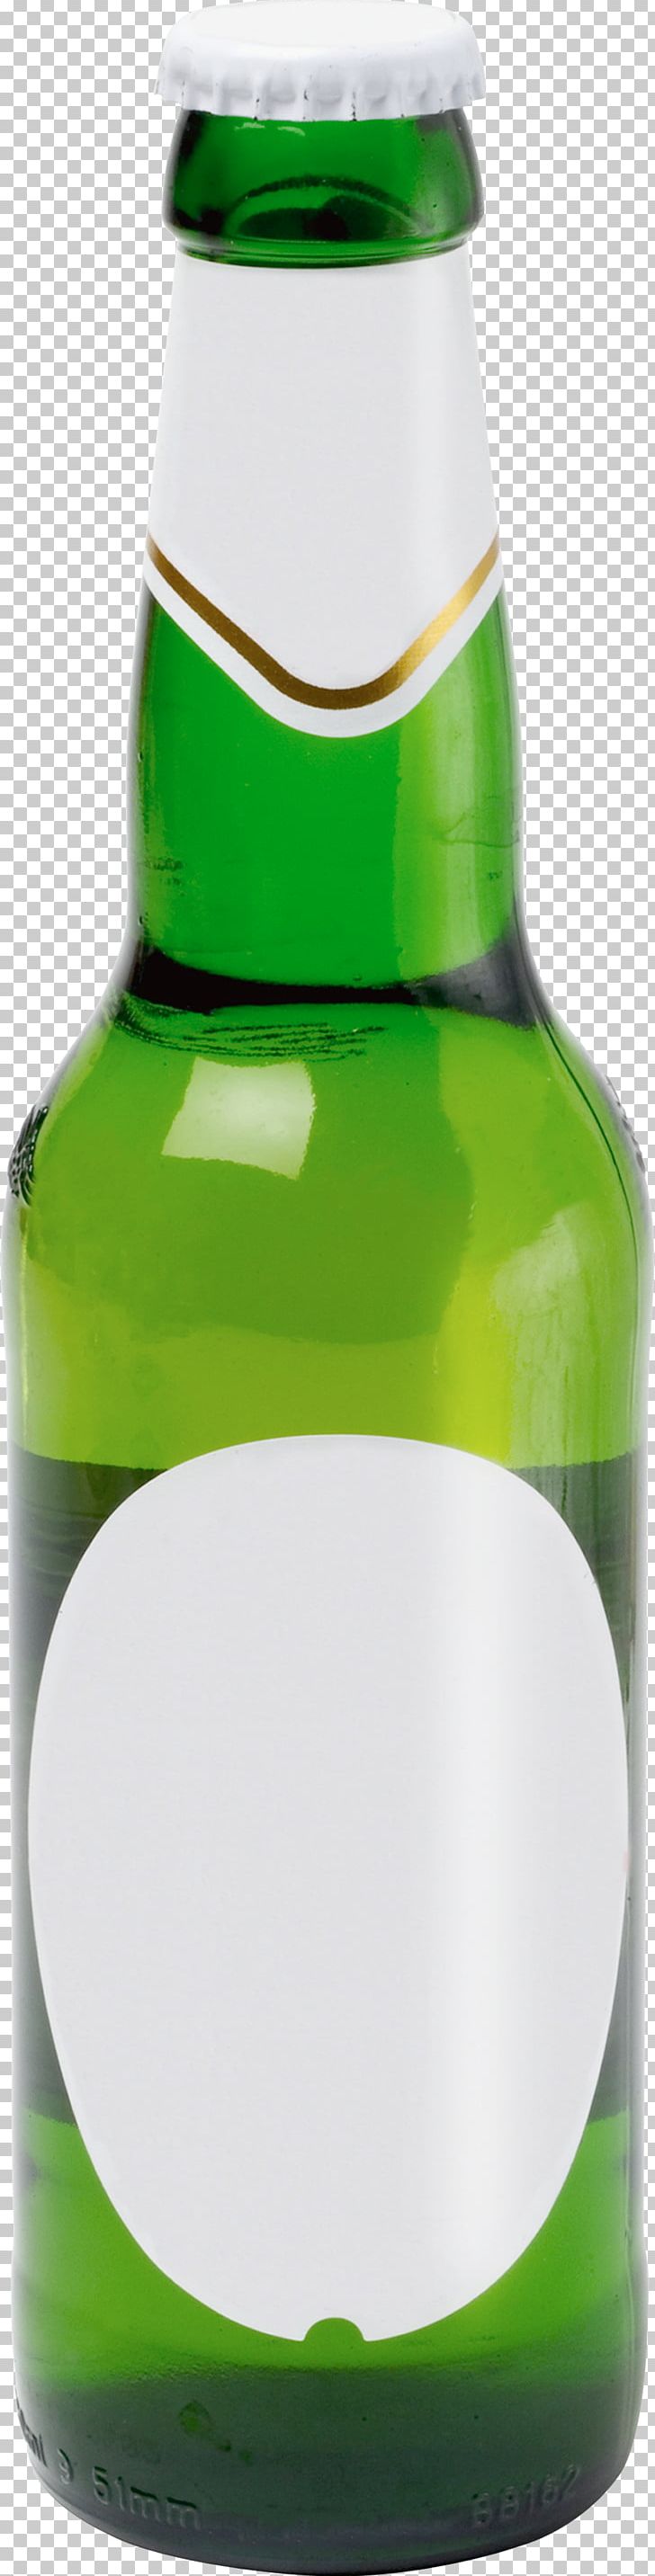 Bottle Beer Butylka PNG, Clipart, Beer, Beer Bottle, Bottle, Butylka, Computer Icons Free PNG Download